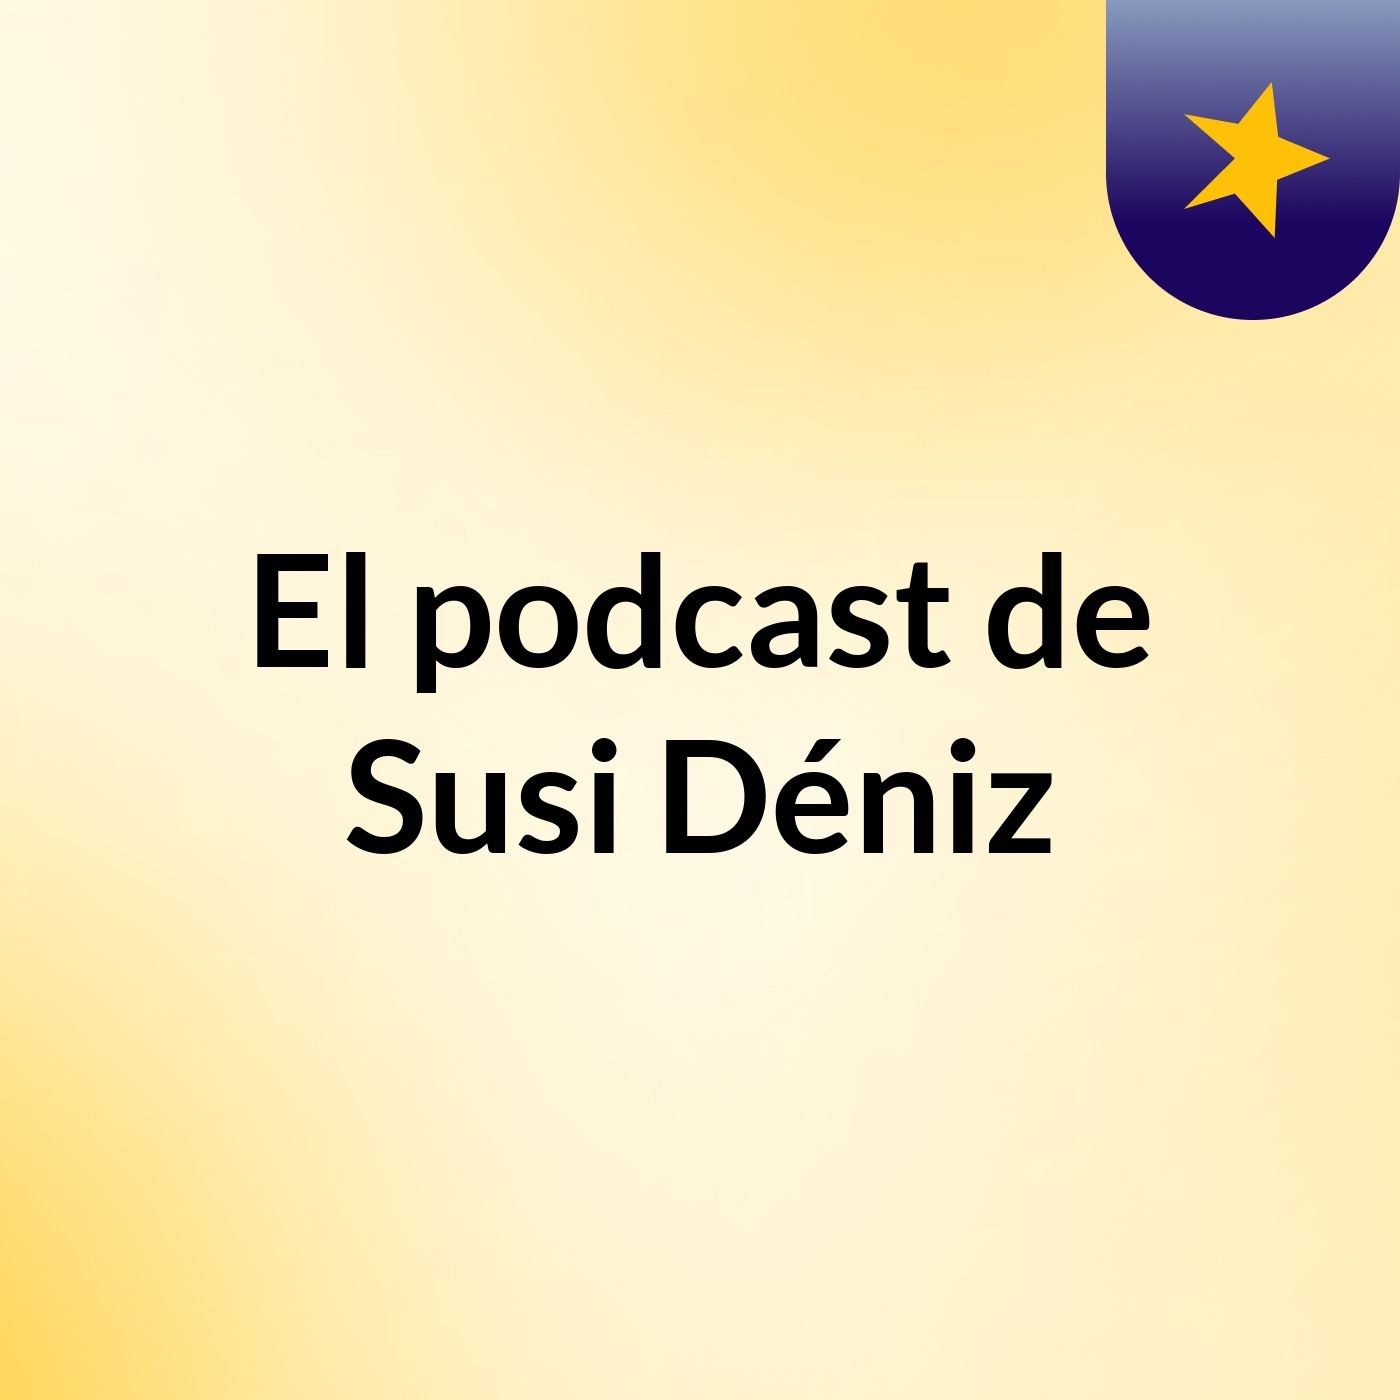 El podcast de Susi Déniz